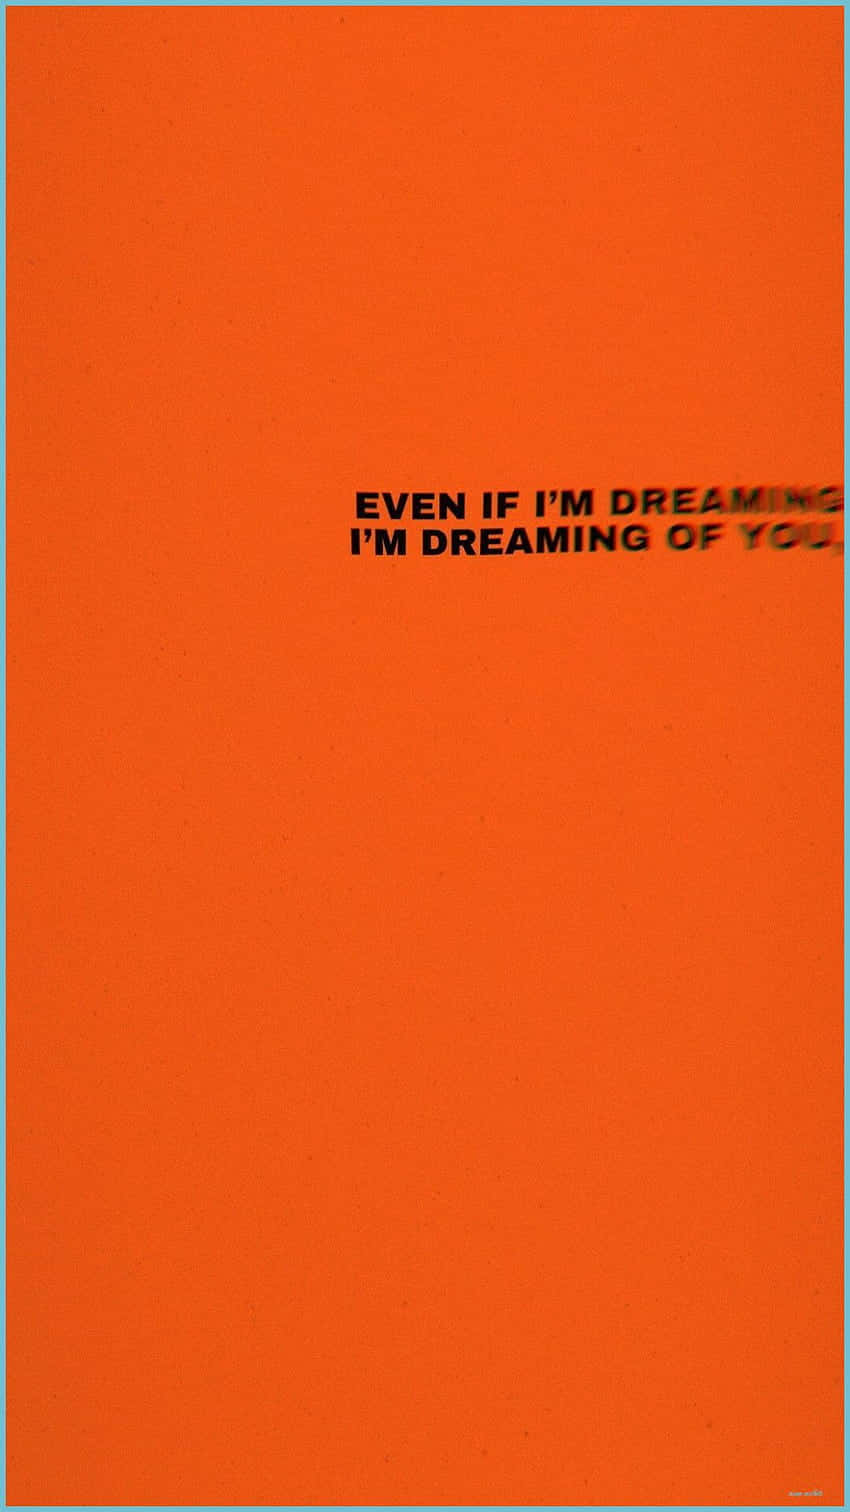 Download Dreaming Of You Orange Aesthetic Phone Wallpaper | Wallpapers.com